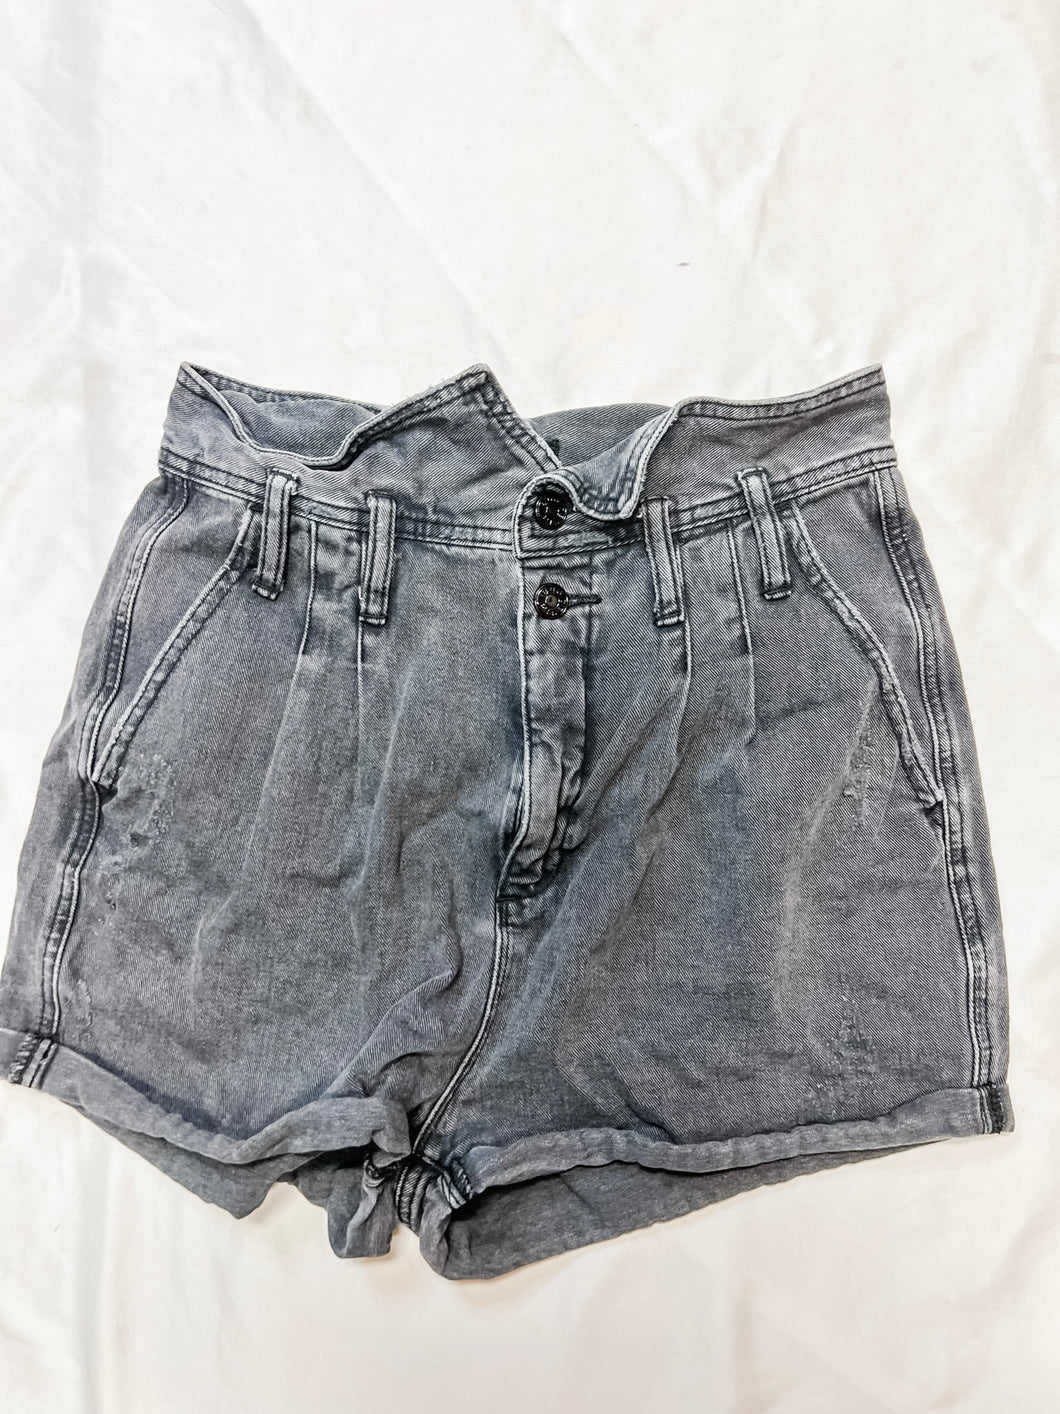 Bdg Shorts Size 3/4 1-M0384